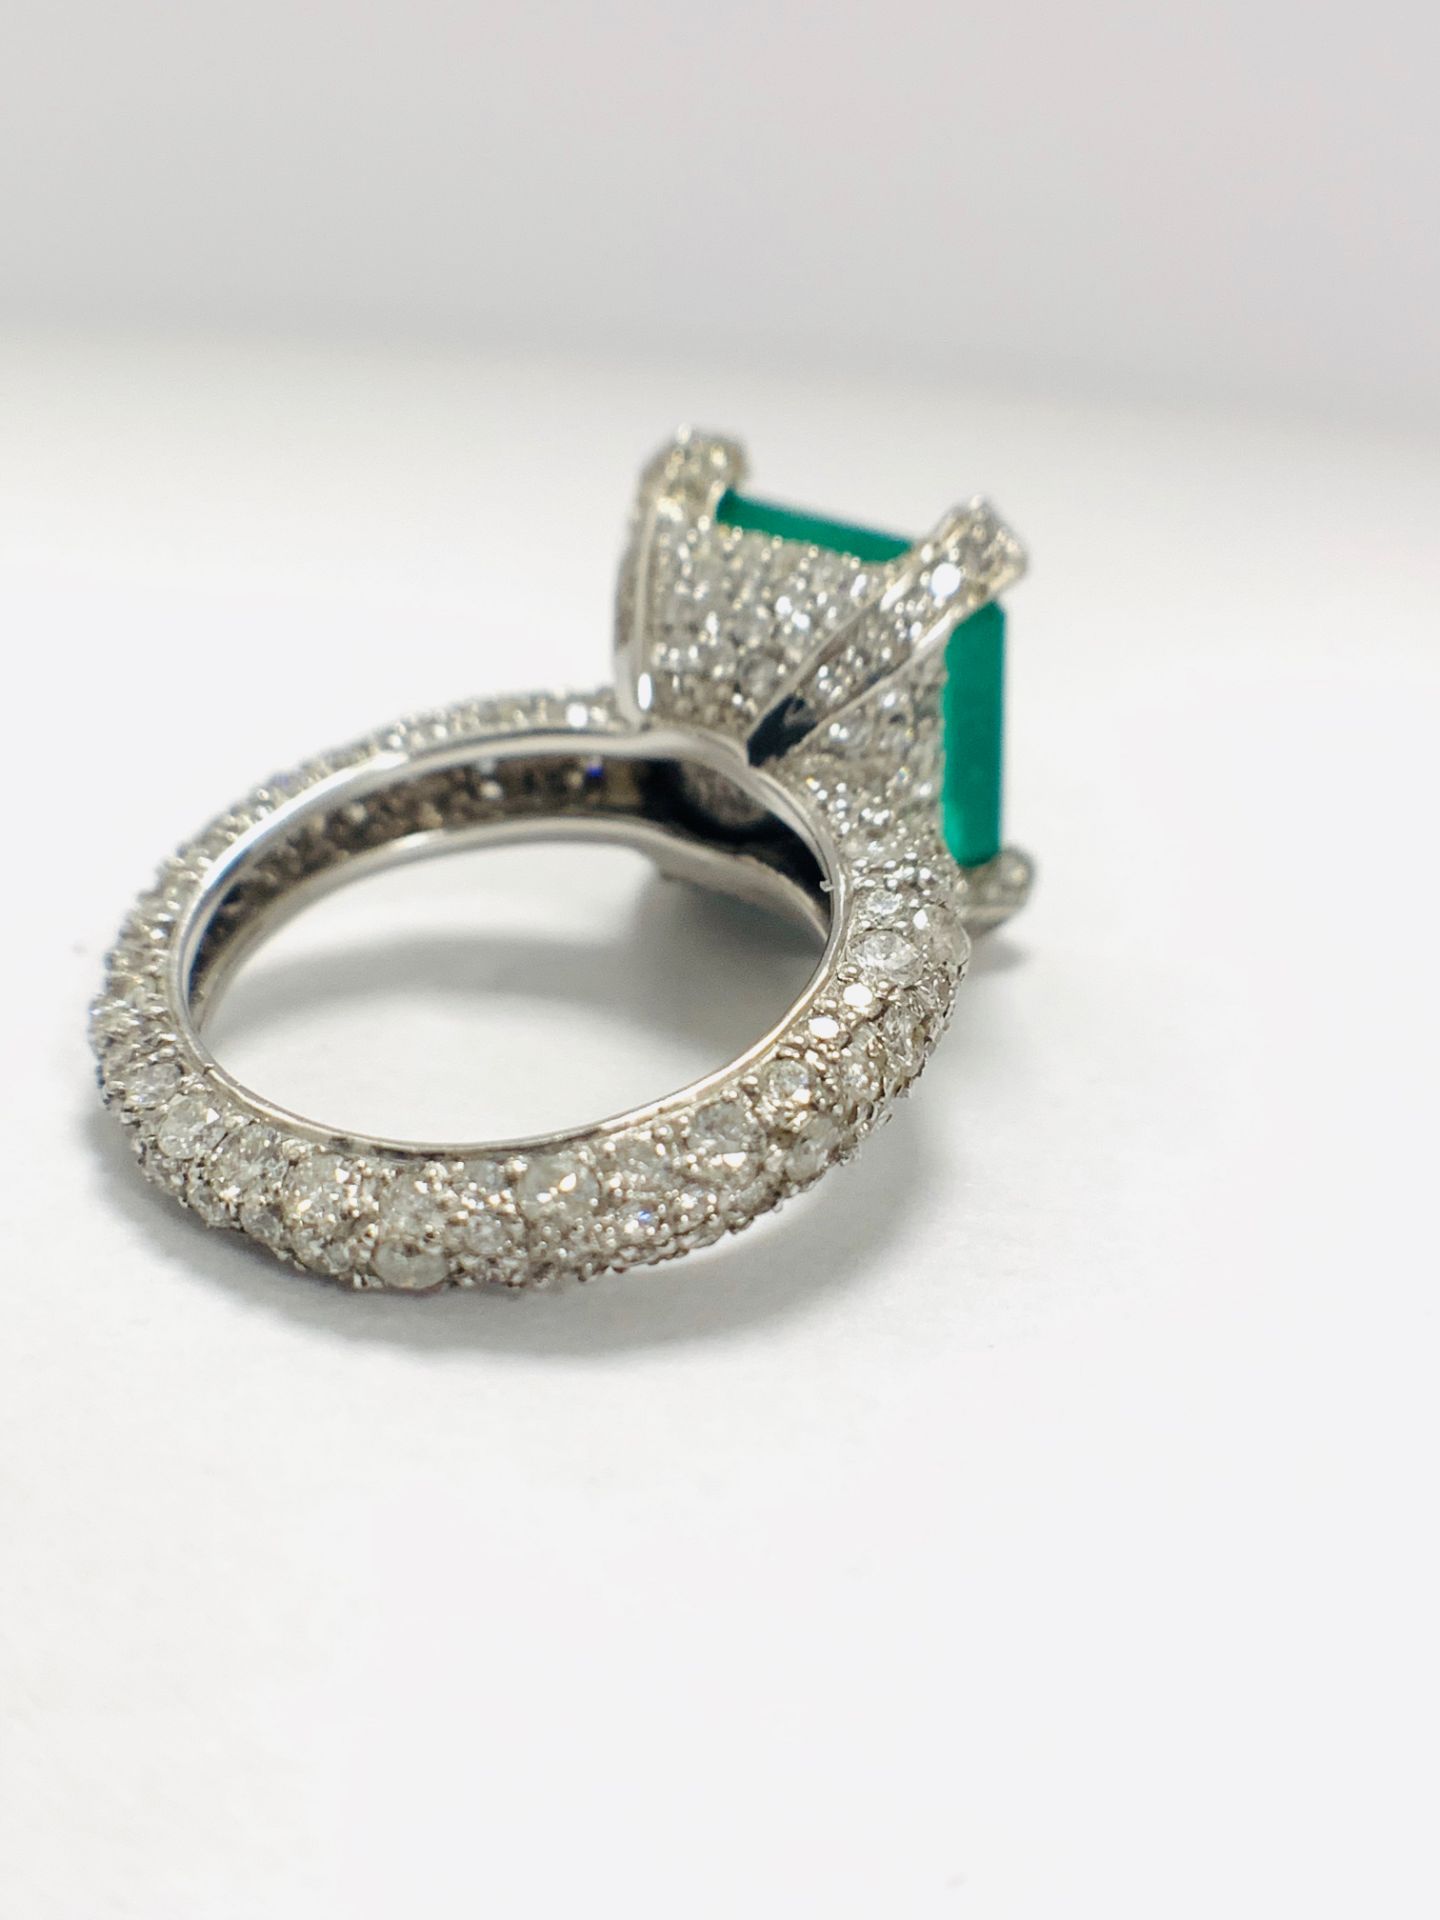 Platinum Emerald and Diamond ring - Image 7 of 17